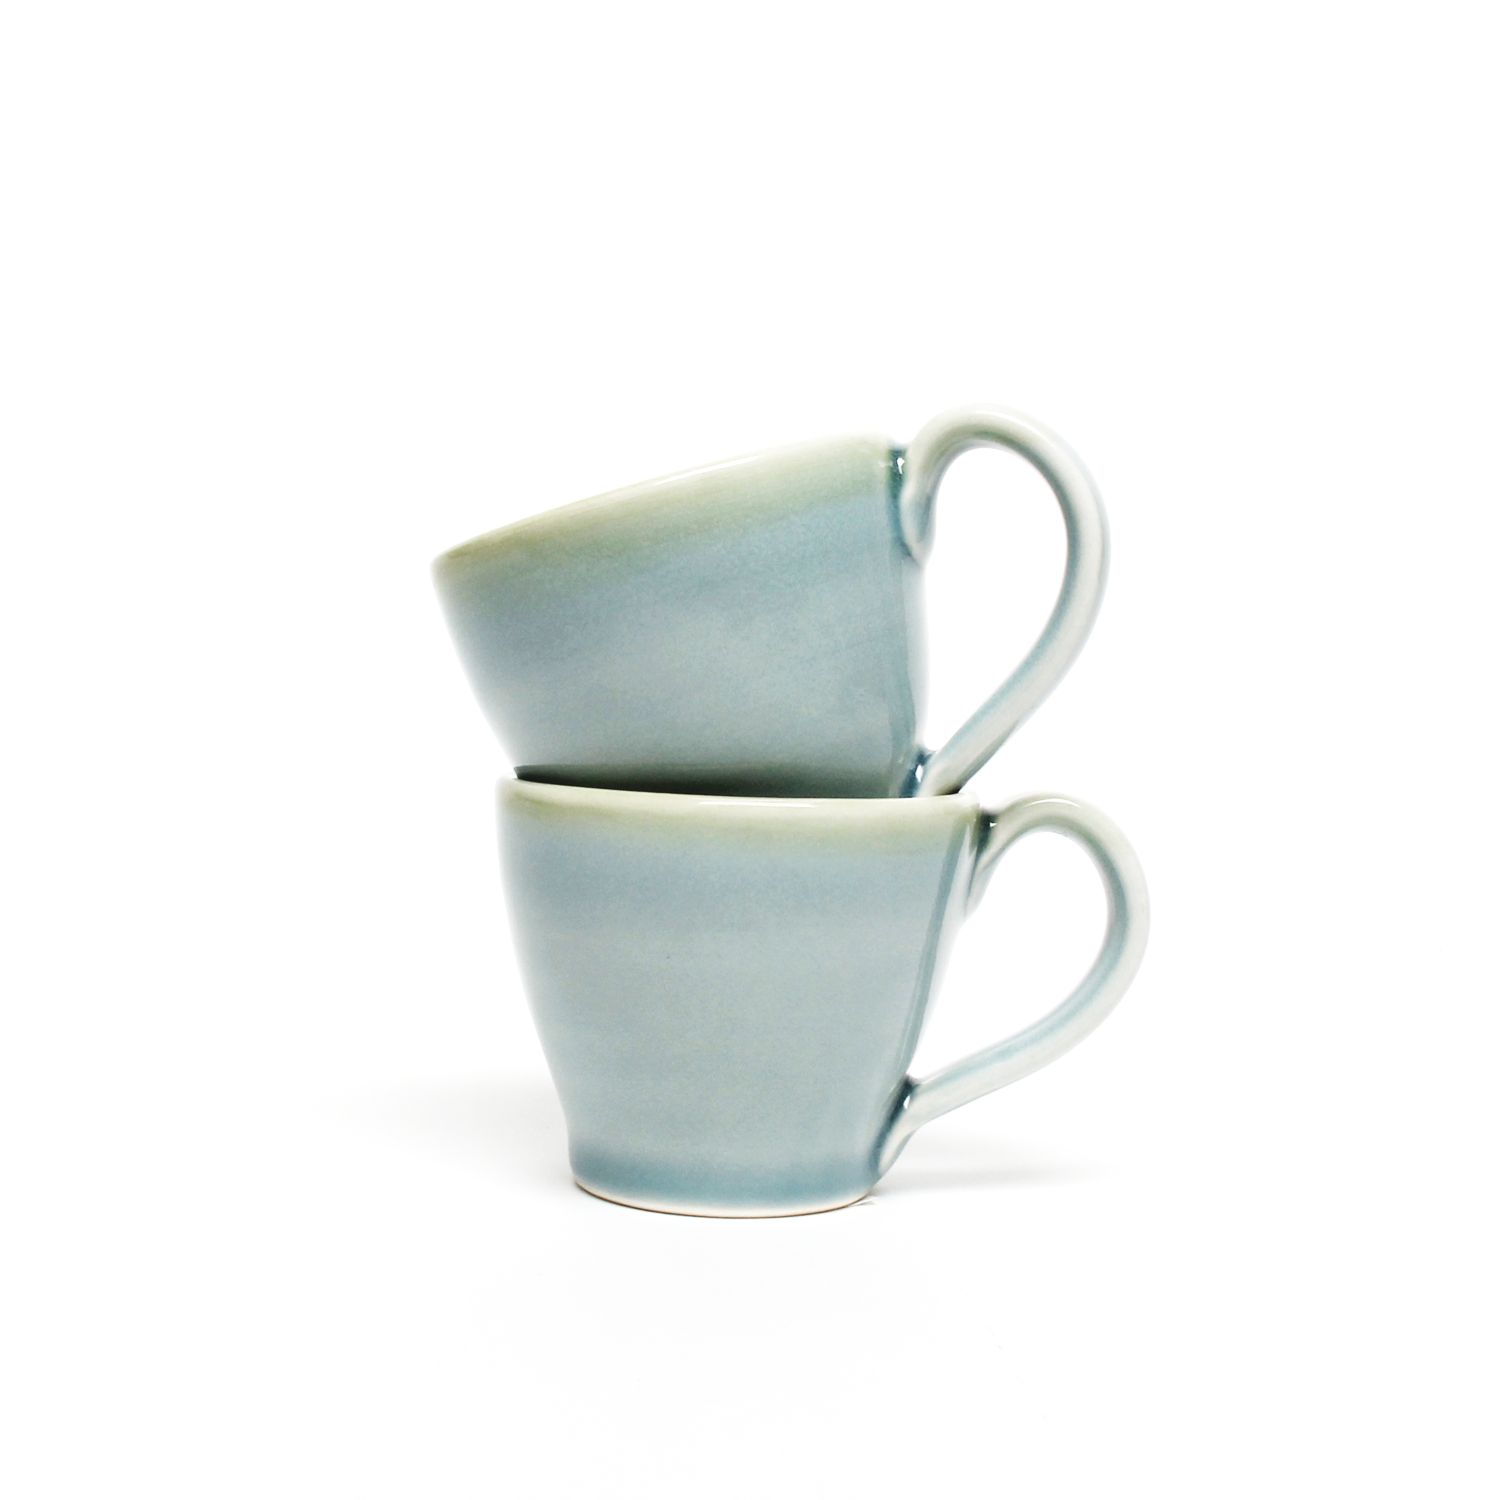 Thomas Aitken: Celadon Espresso Cup Product Image 1 of 3